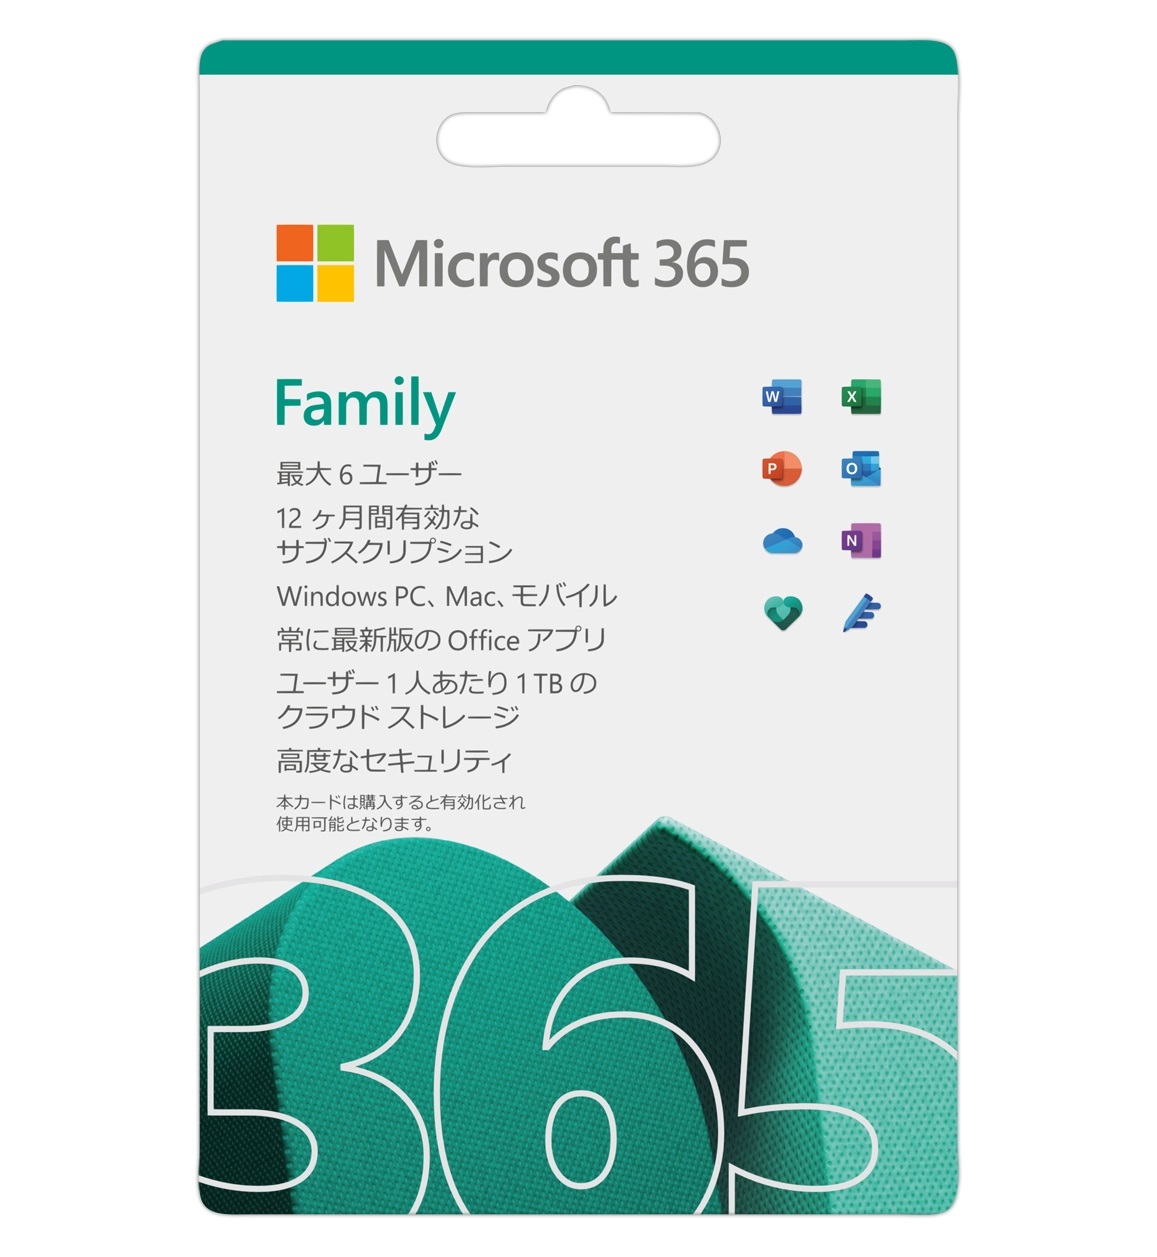 Microsoft 365 Personal から Microsoft 365 Family に変更する方法と